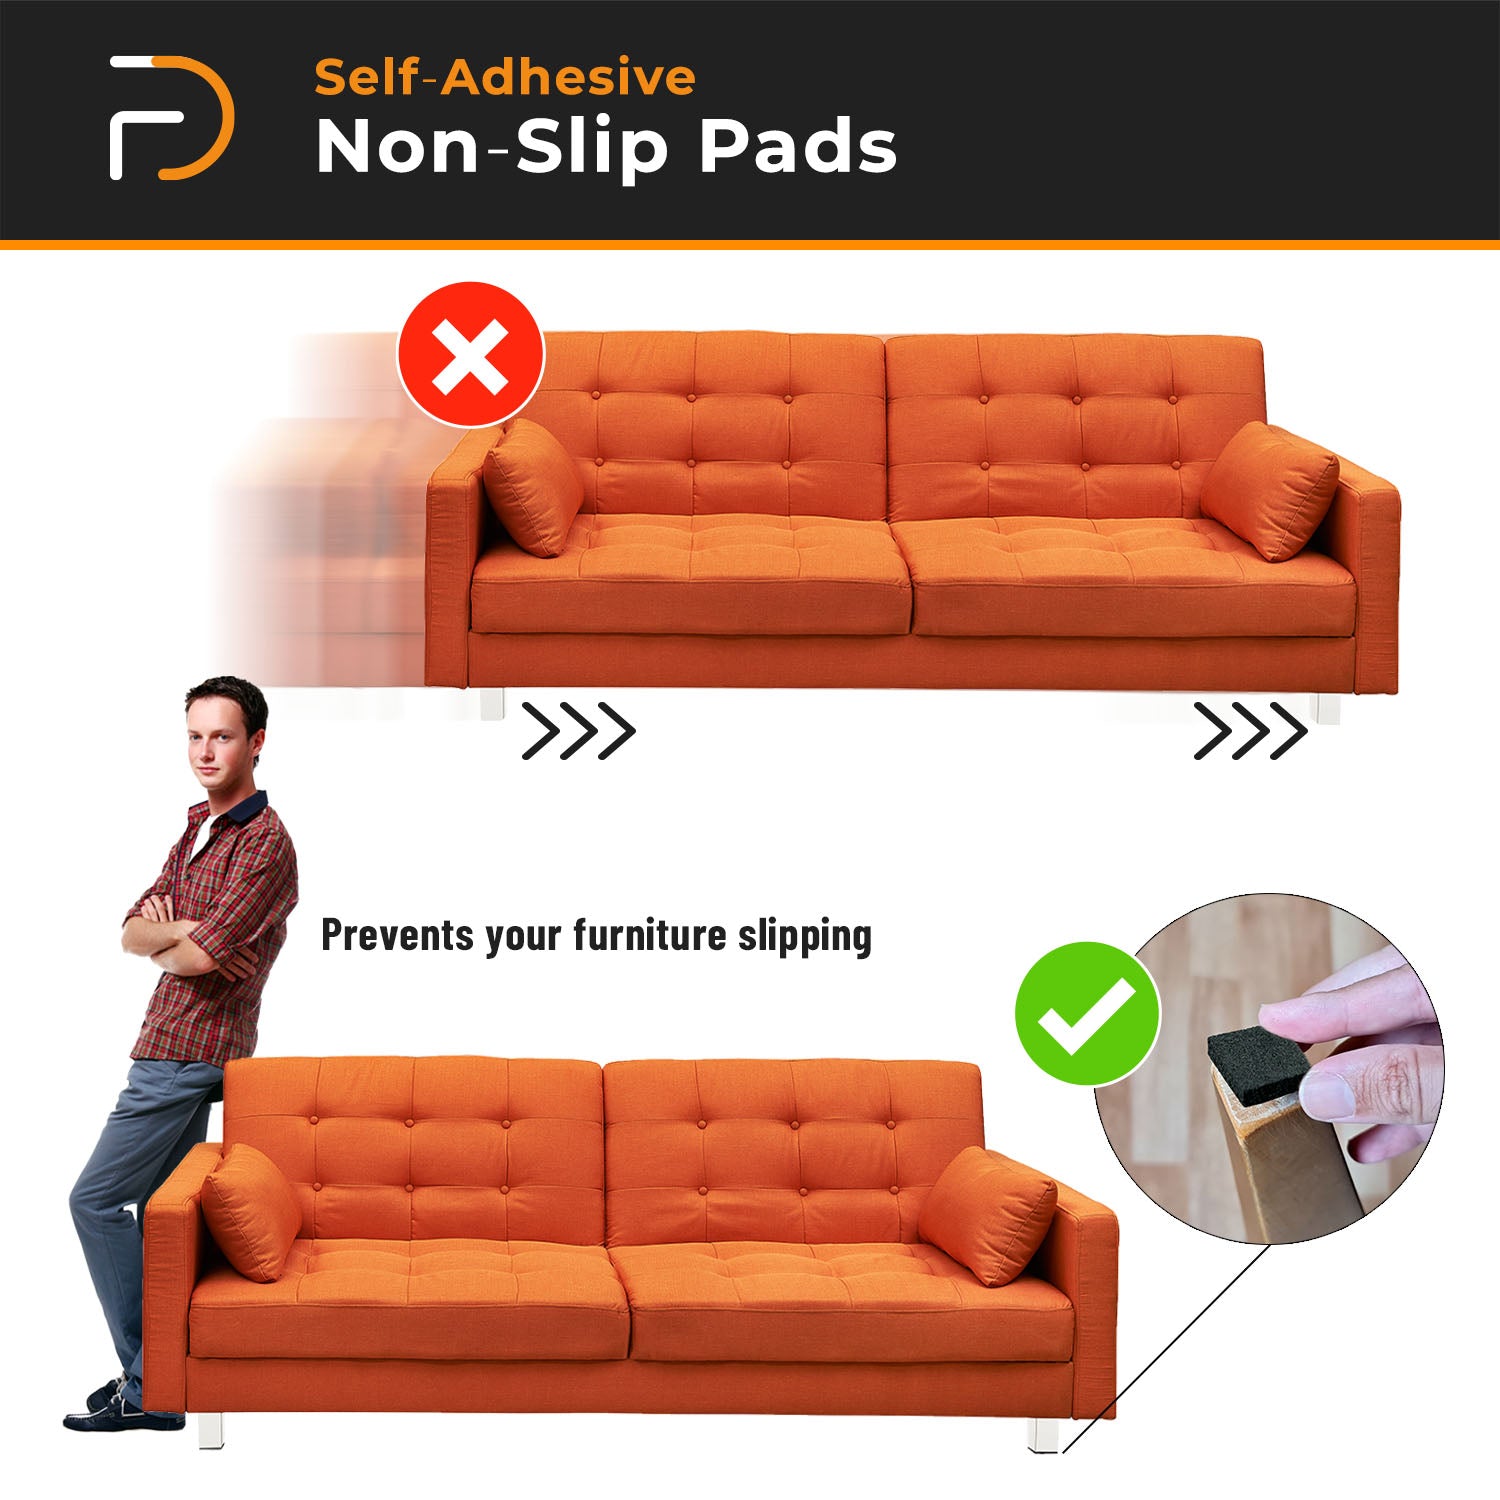 Furndiy Self-Adhesive Non-Slip Eva Pads for Chair & Seat Furniture Feet Pads Hardwood Floor Protection - Noise Stopper (White)